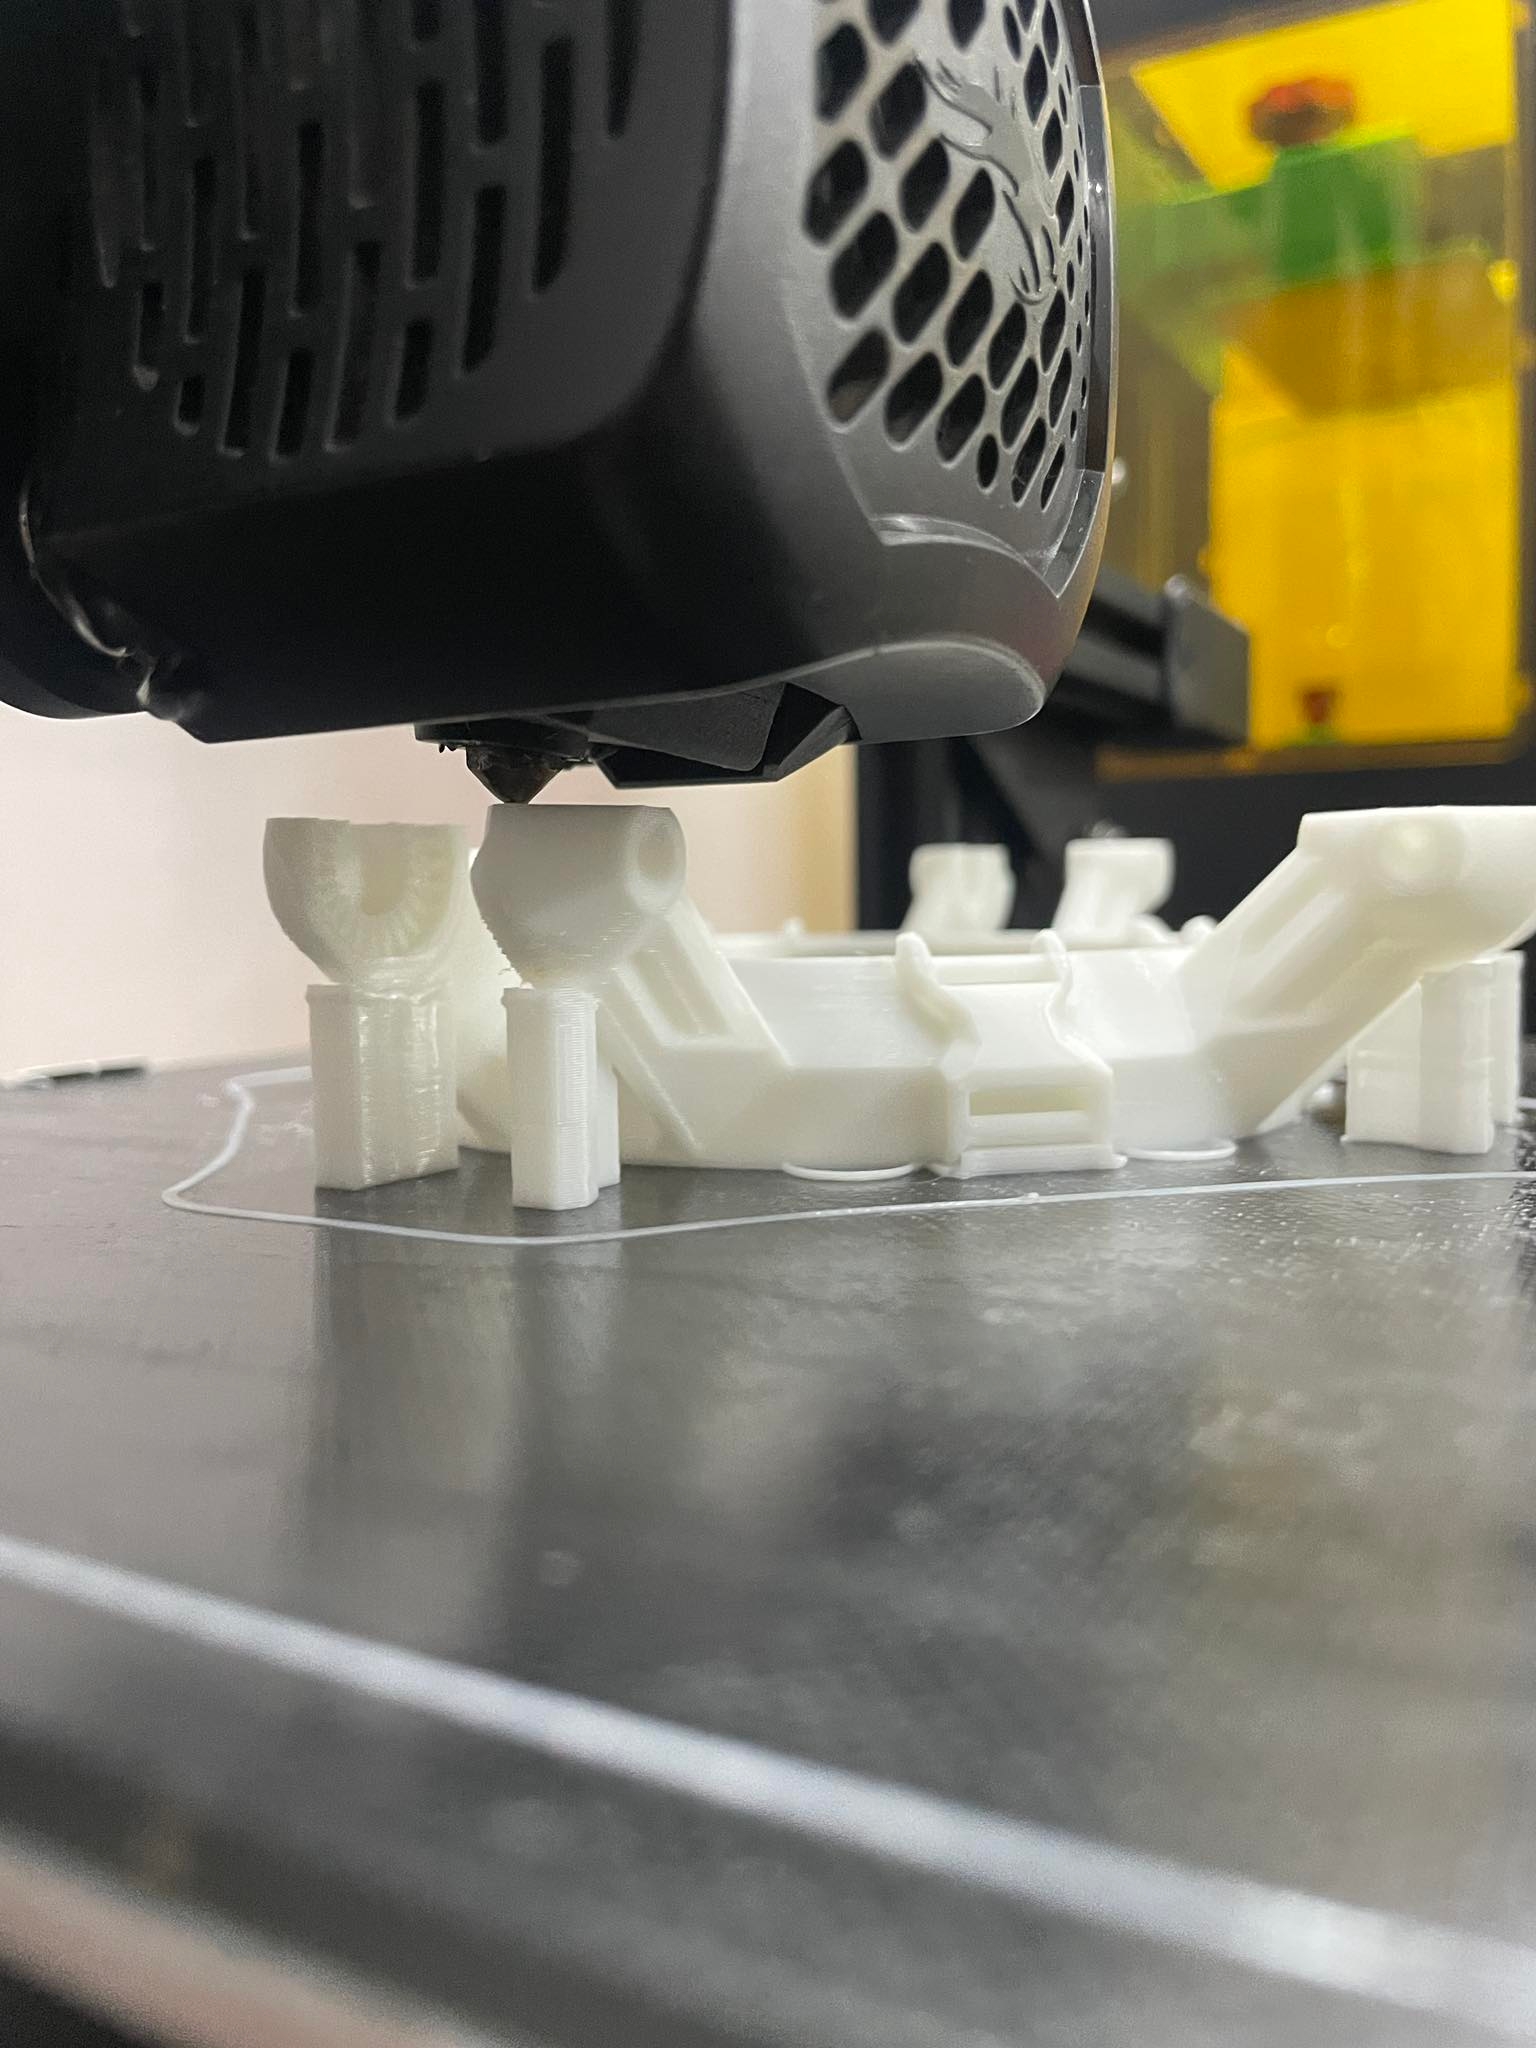 Snap fit 3D printed design